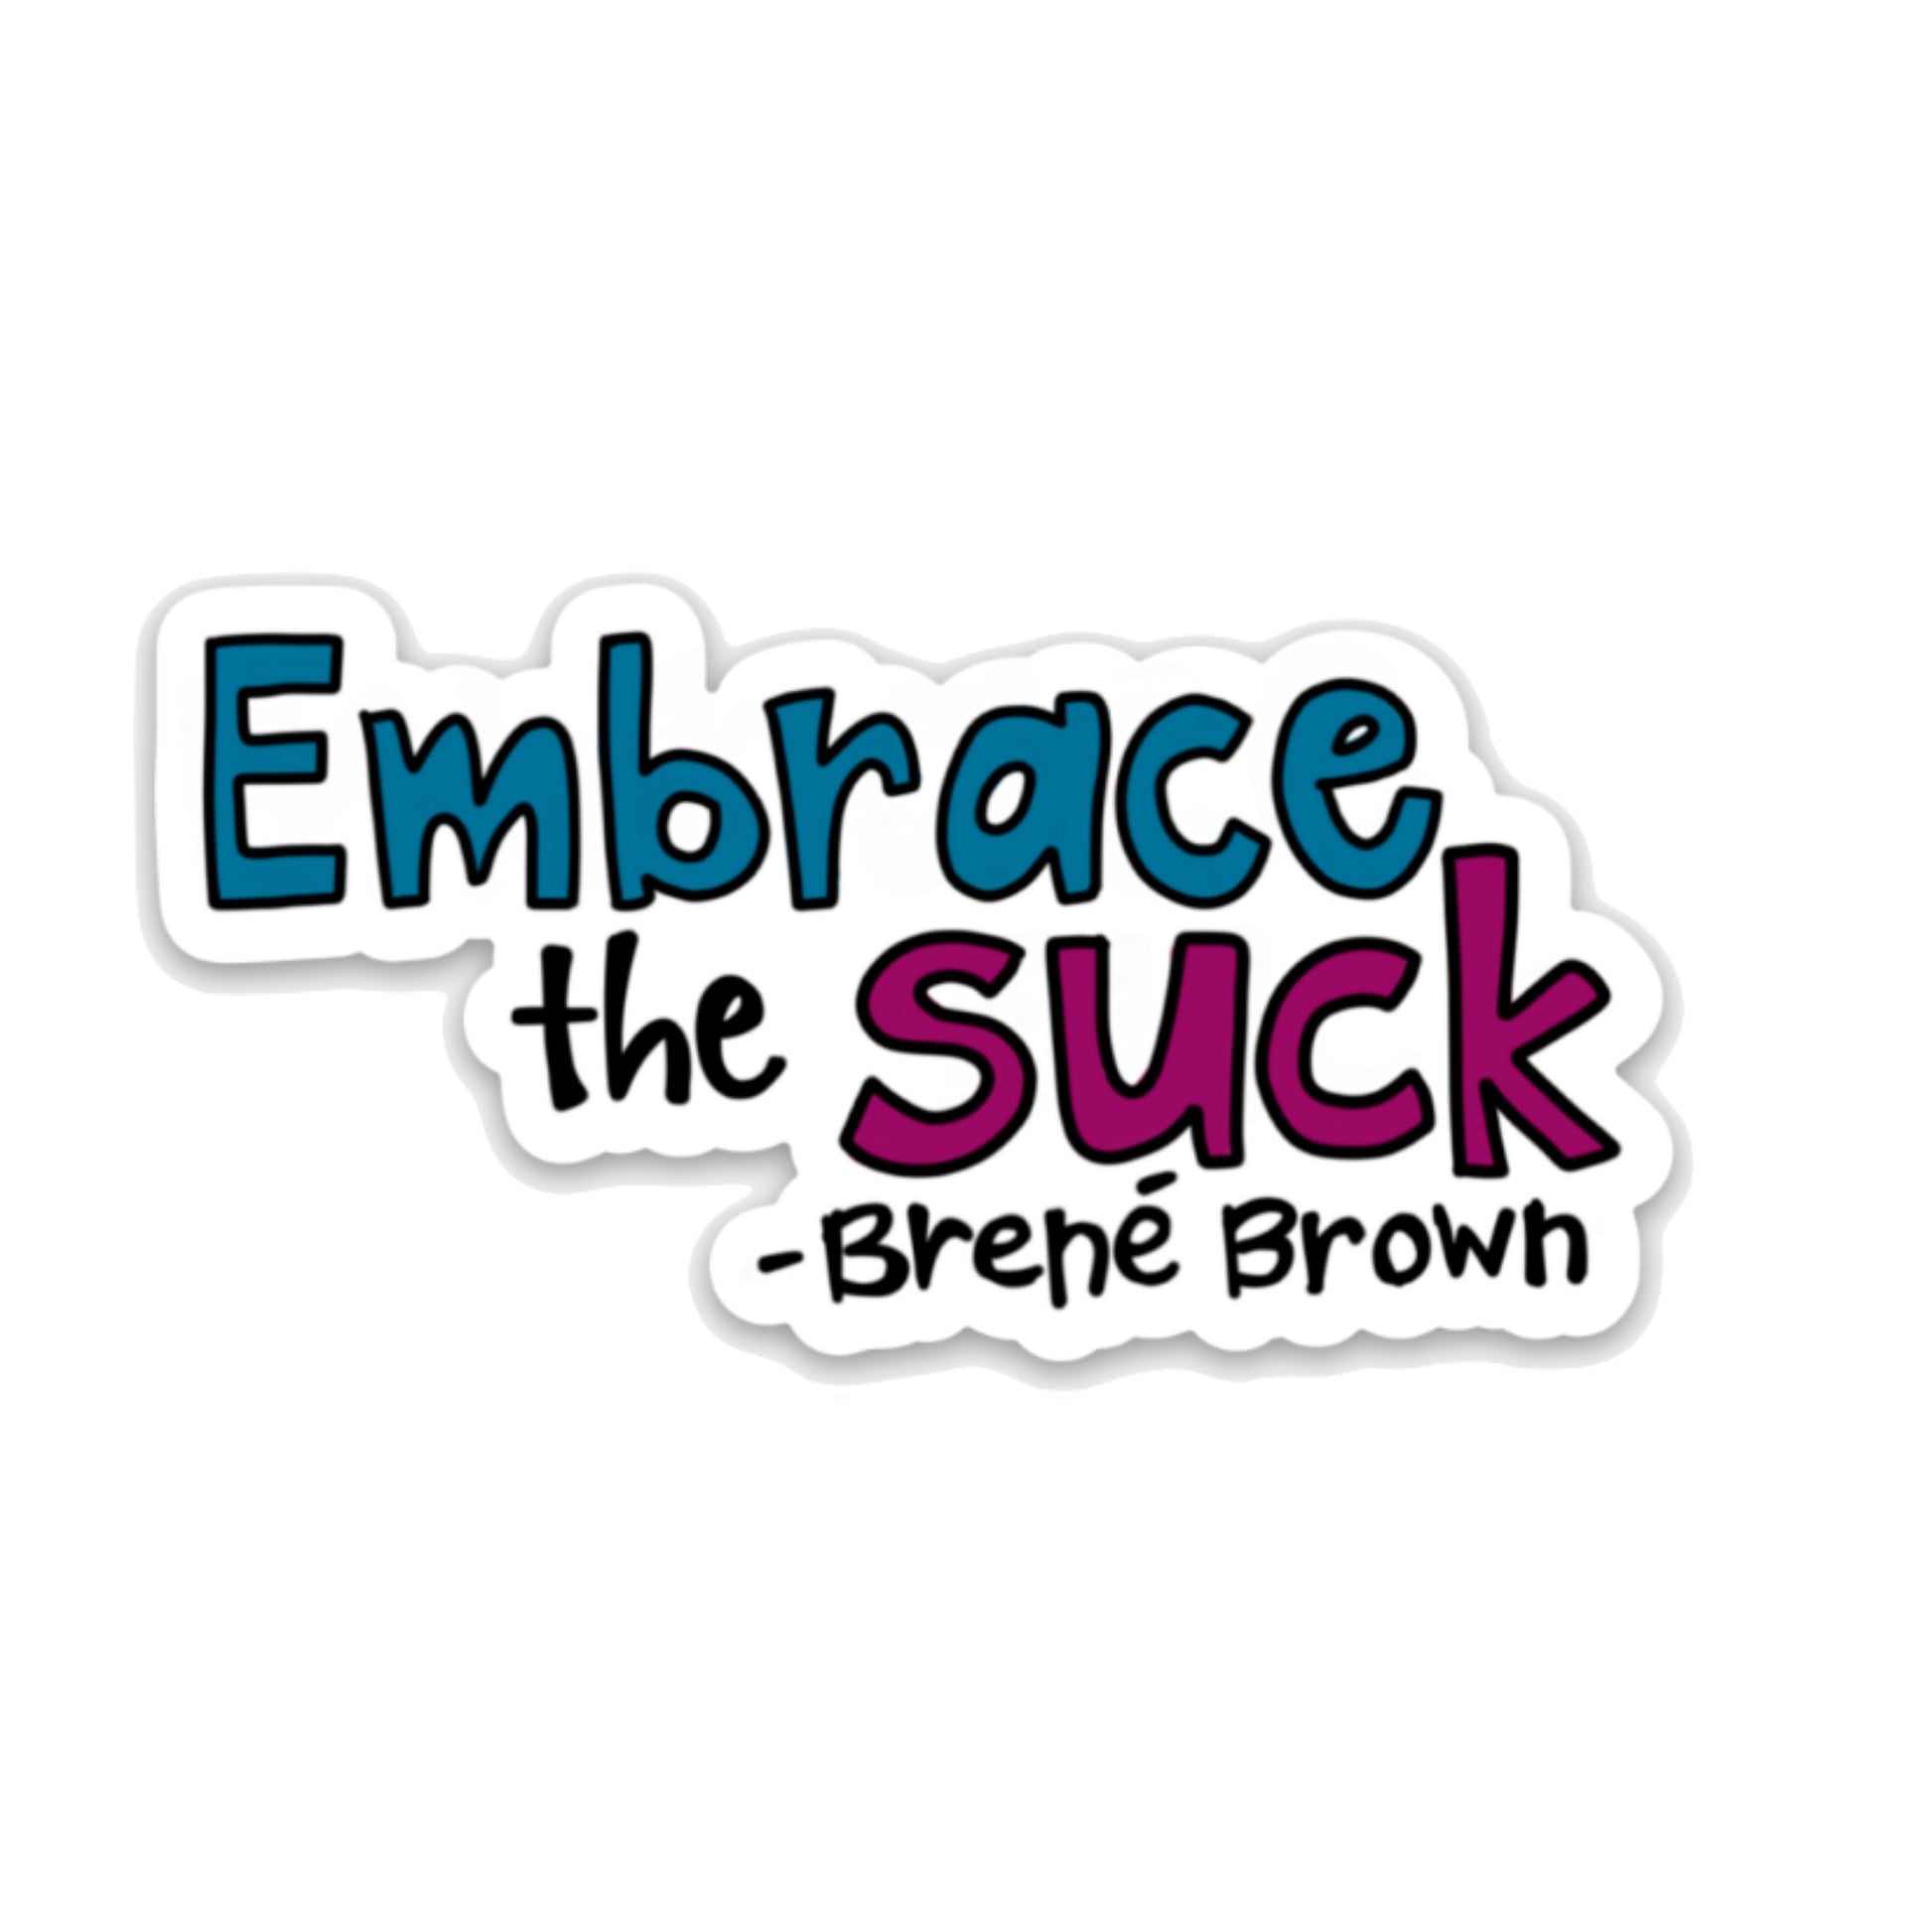 "Embrace the suck" -Brené Brown Sticker - TinySuperheroes